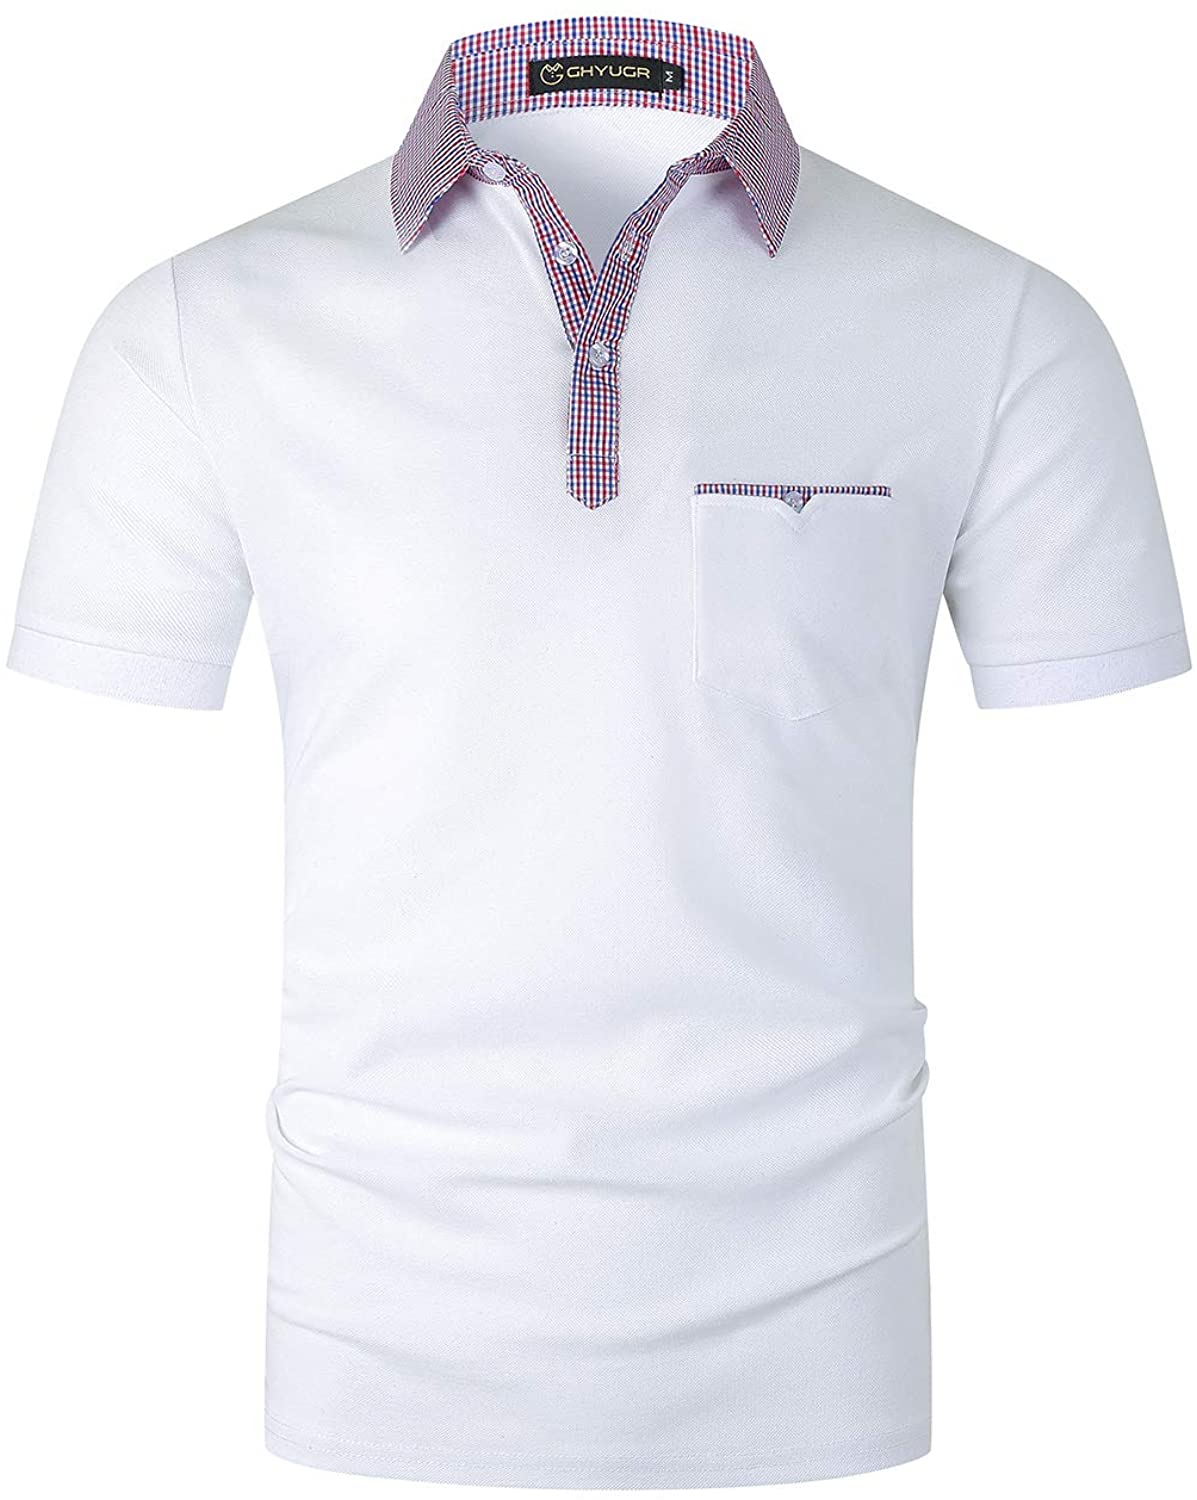 quality merchandise GHYUGR Short Sleeve Polo Shirts for Men Basic ...